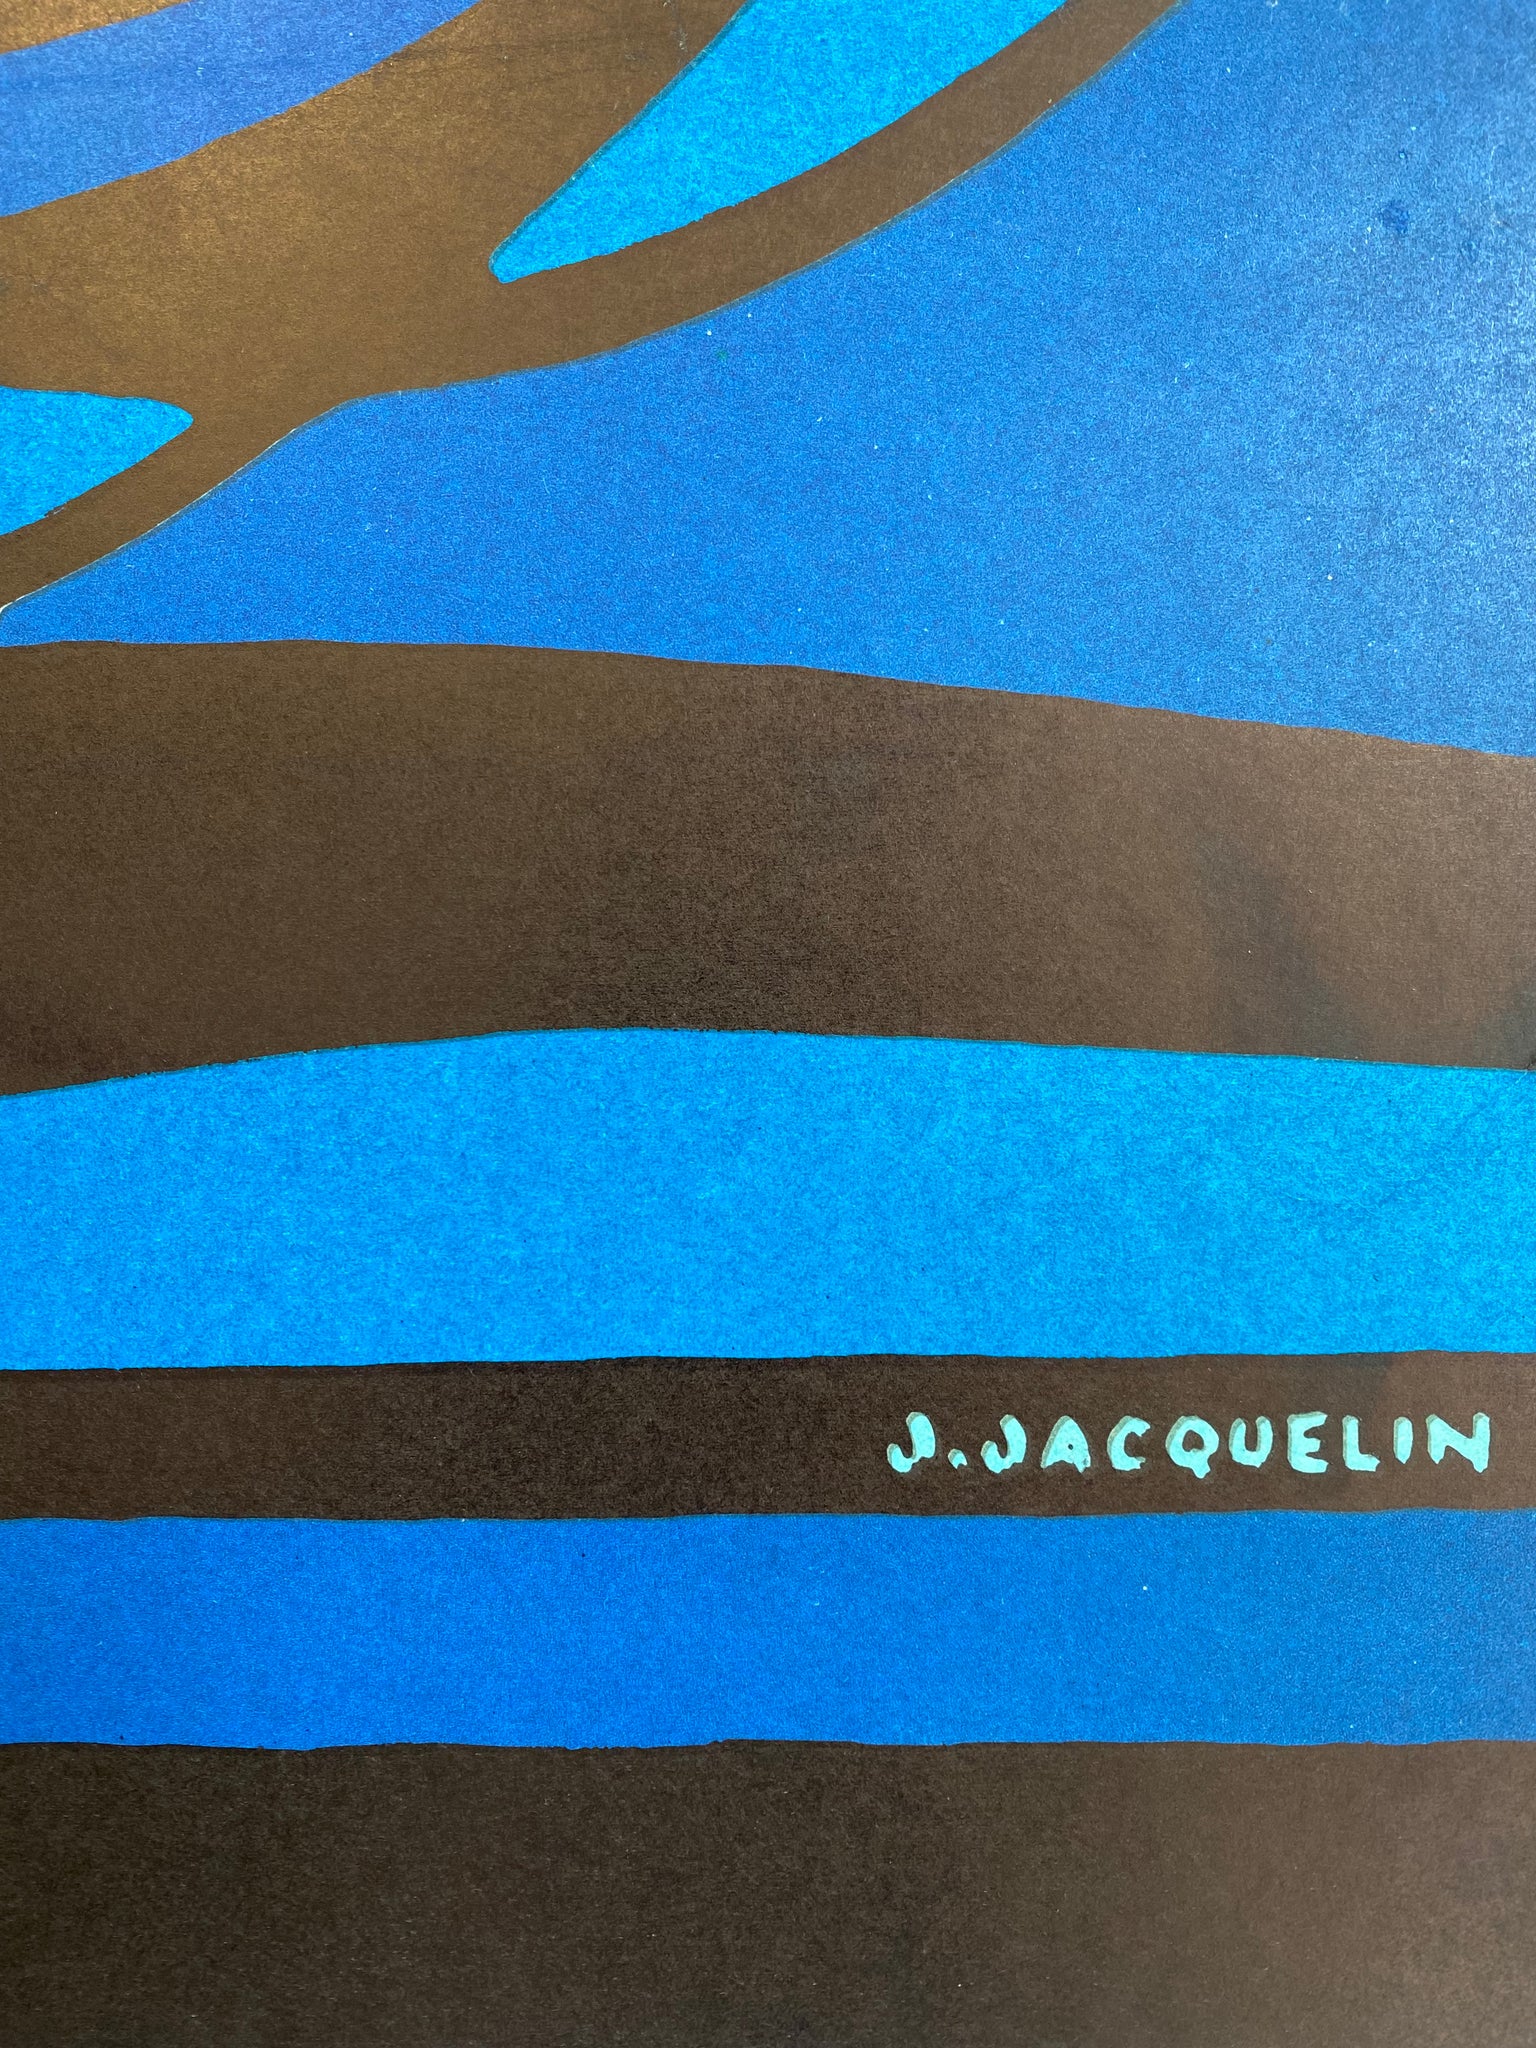 Affiche Originale Emprunt SNCF - Jacquelin 1975